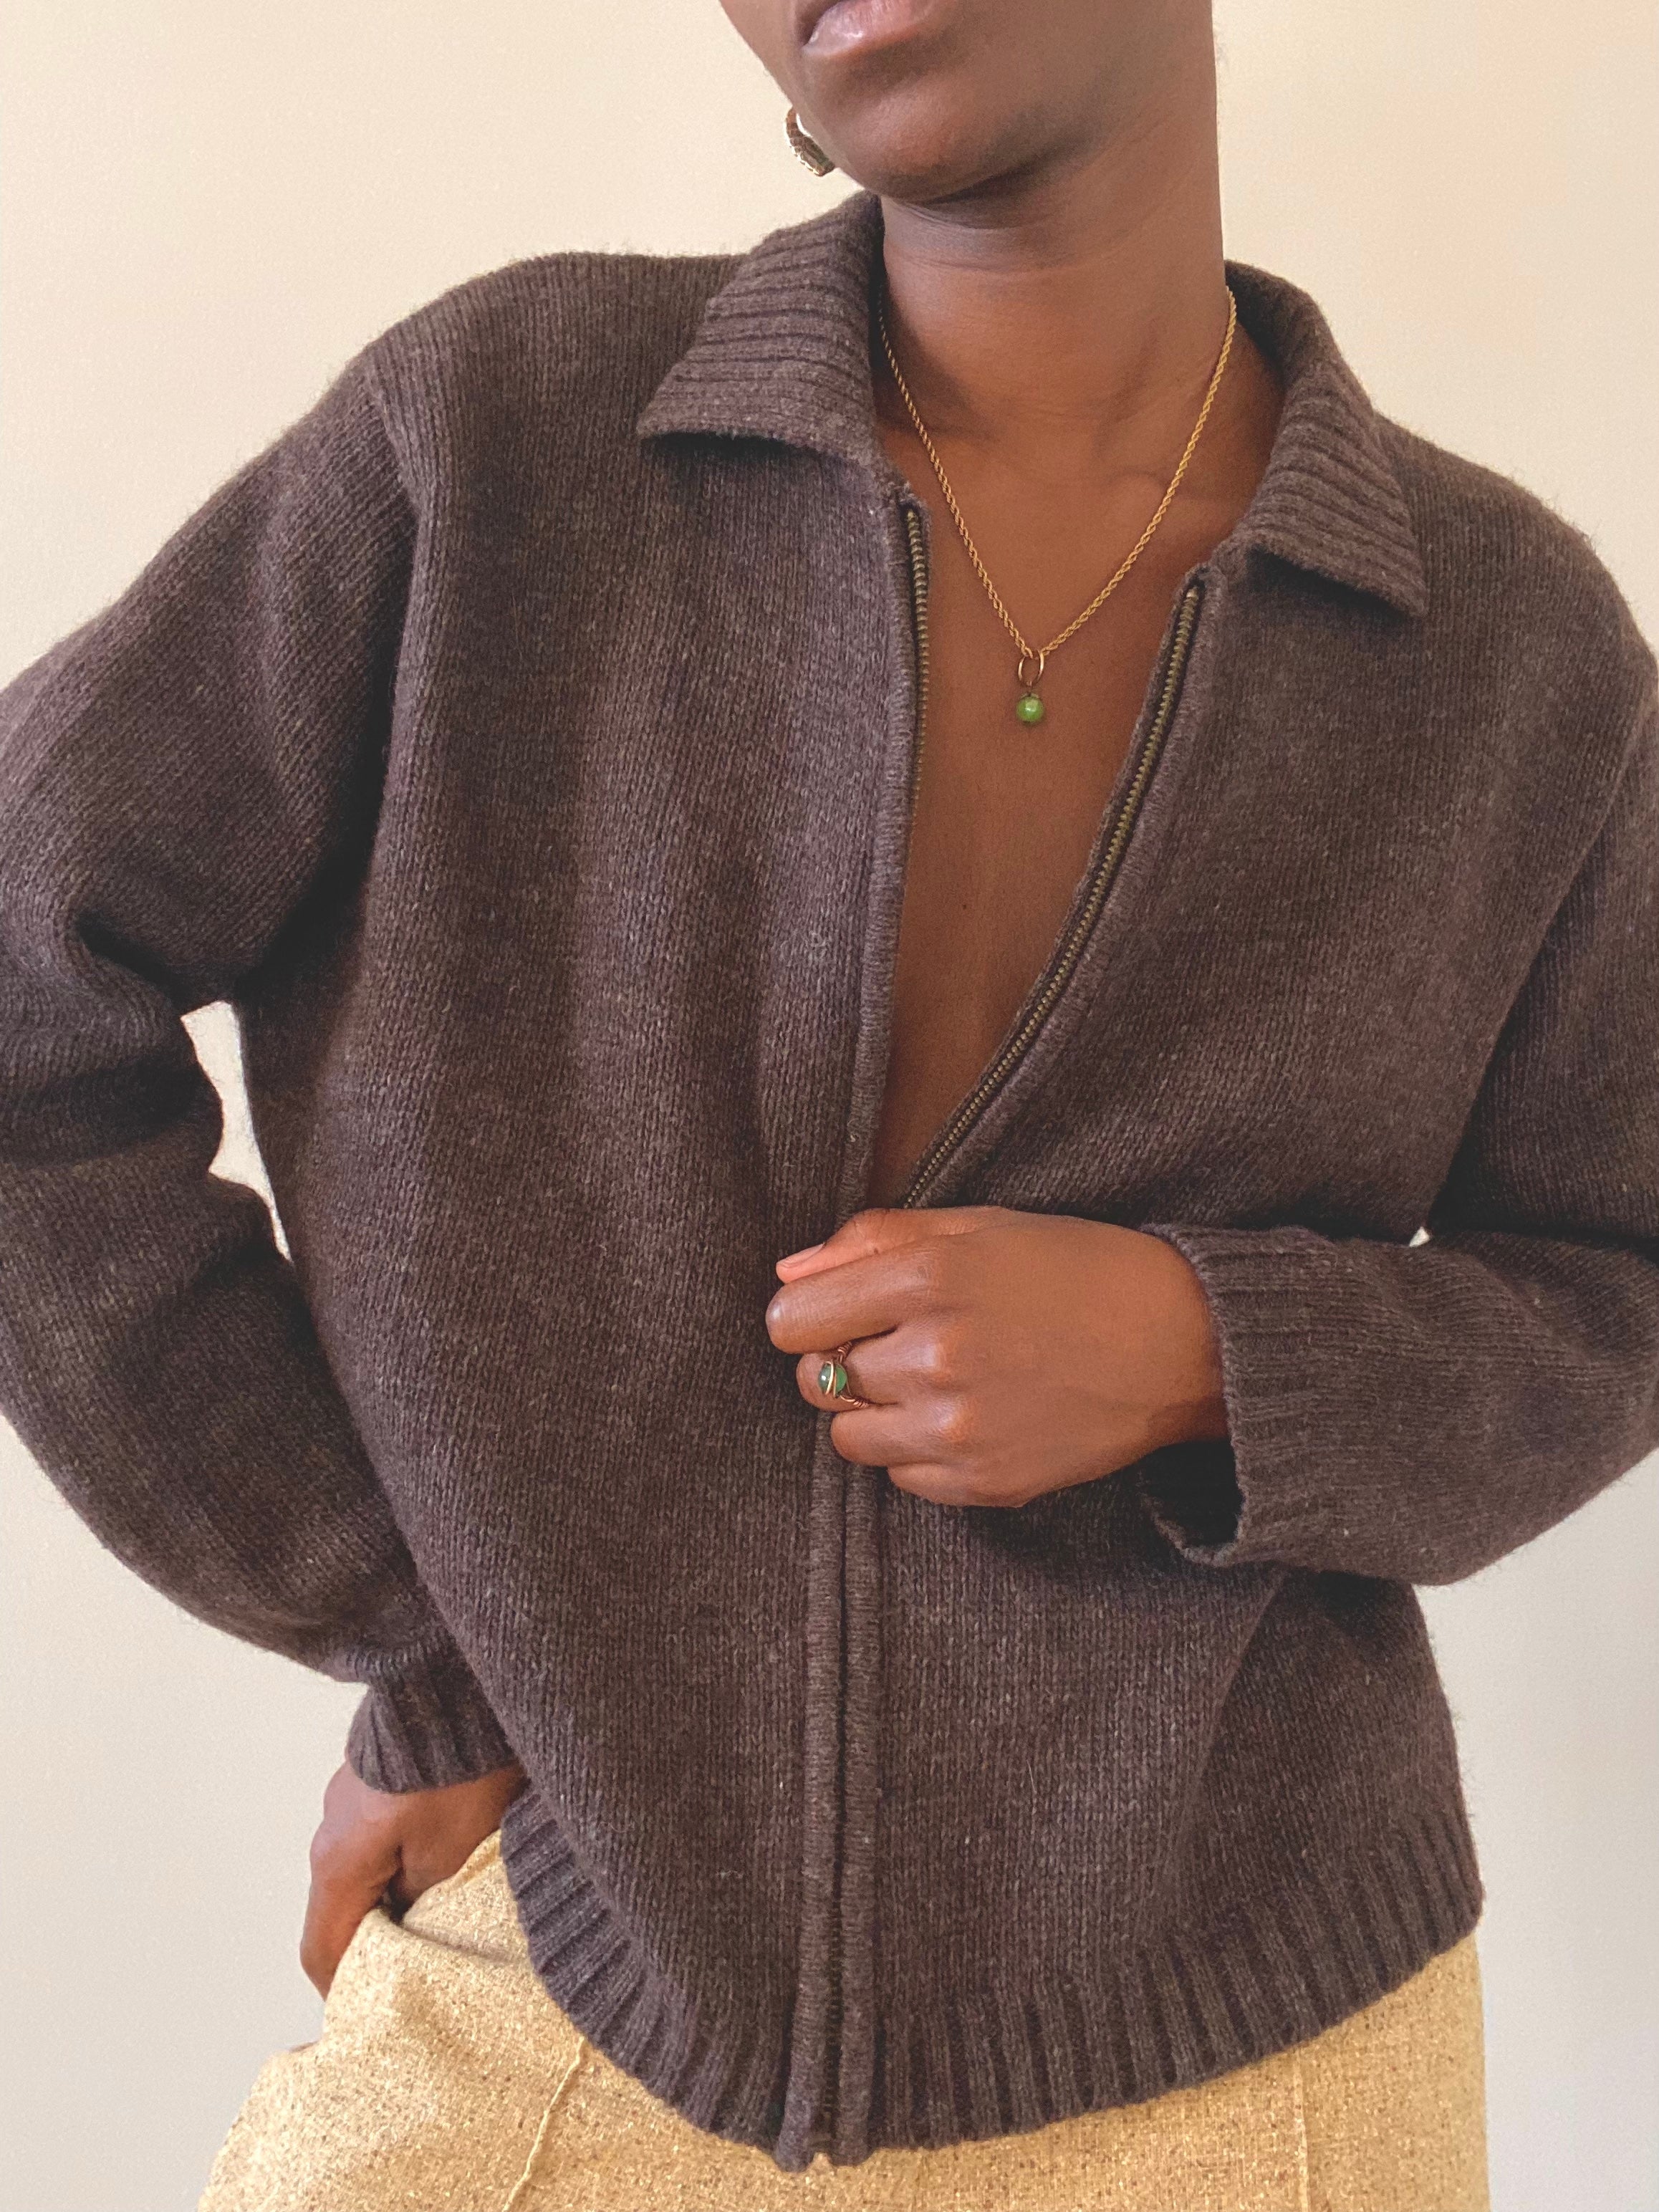 Brown Wool Zip Up Sweater